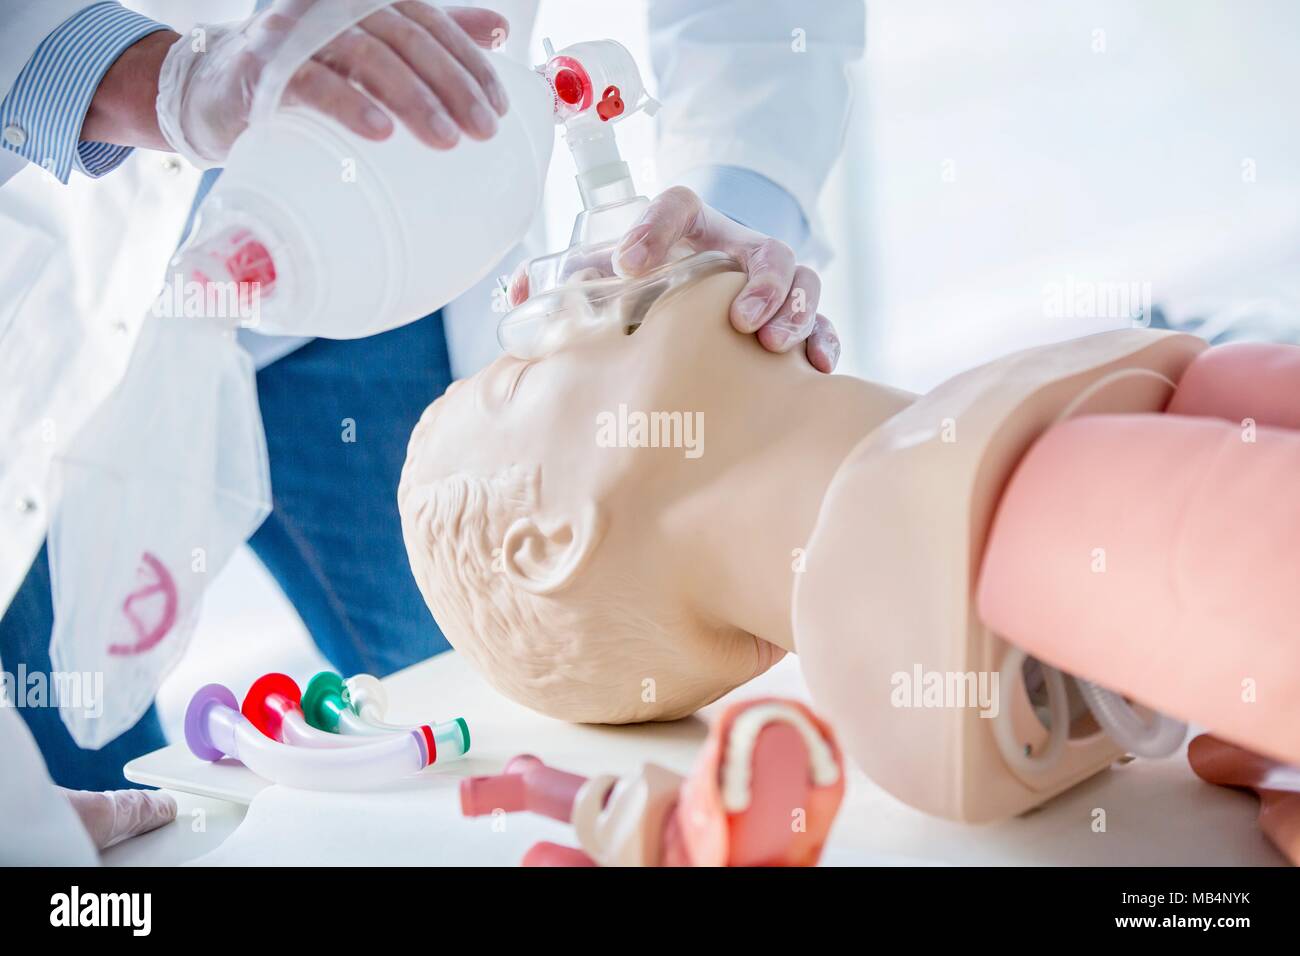 Doctor practising bag-valve-mask ventilation on a training dummy. Stock Photo